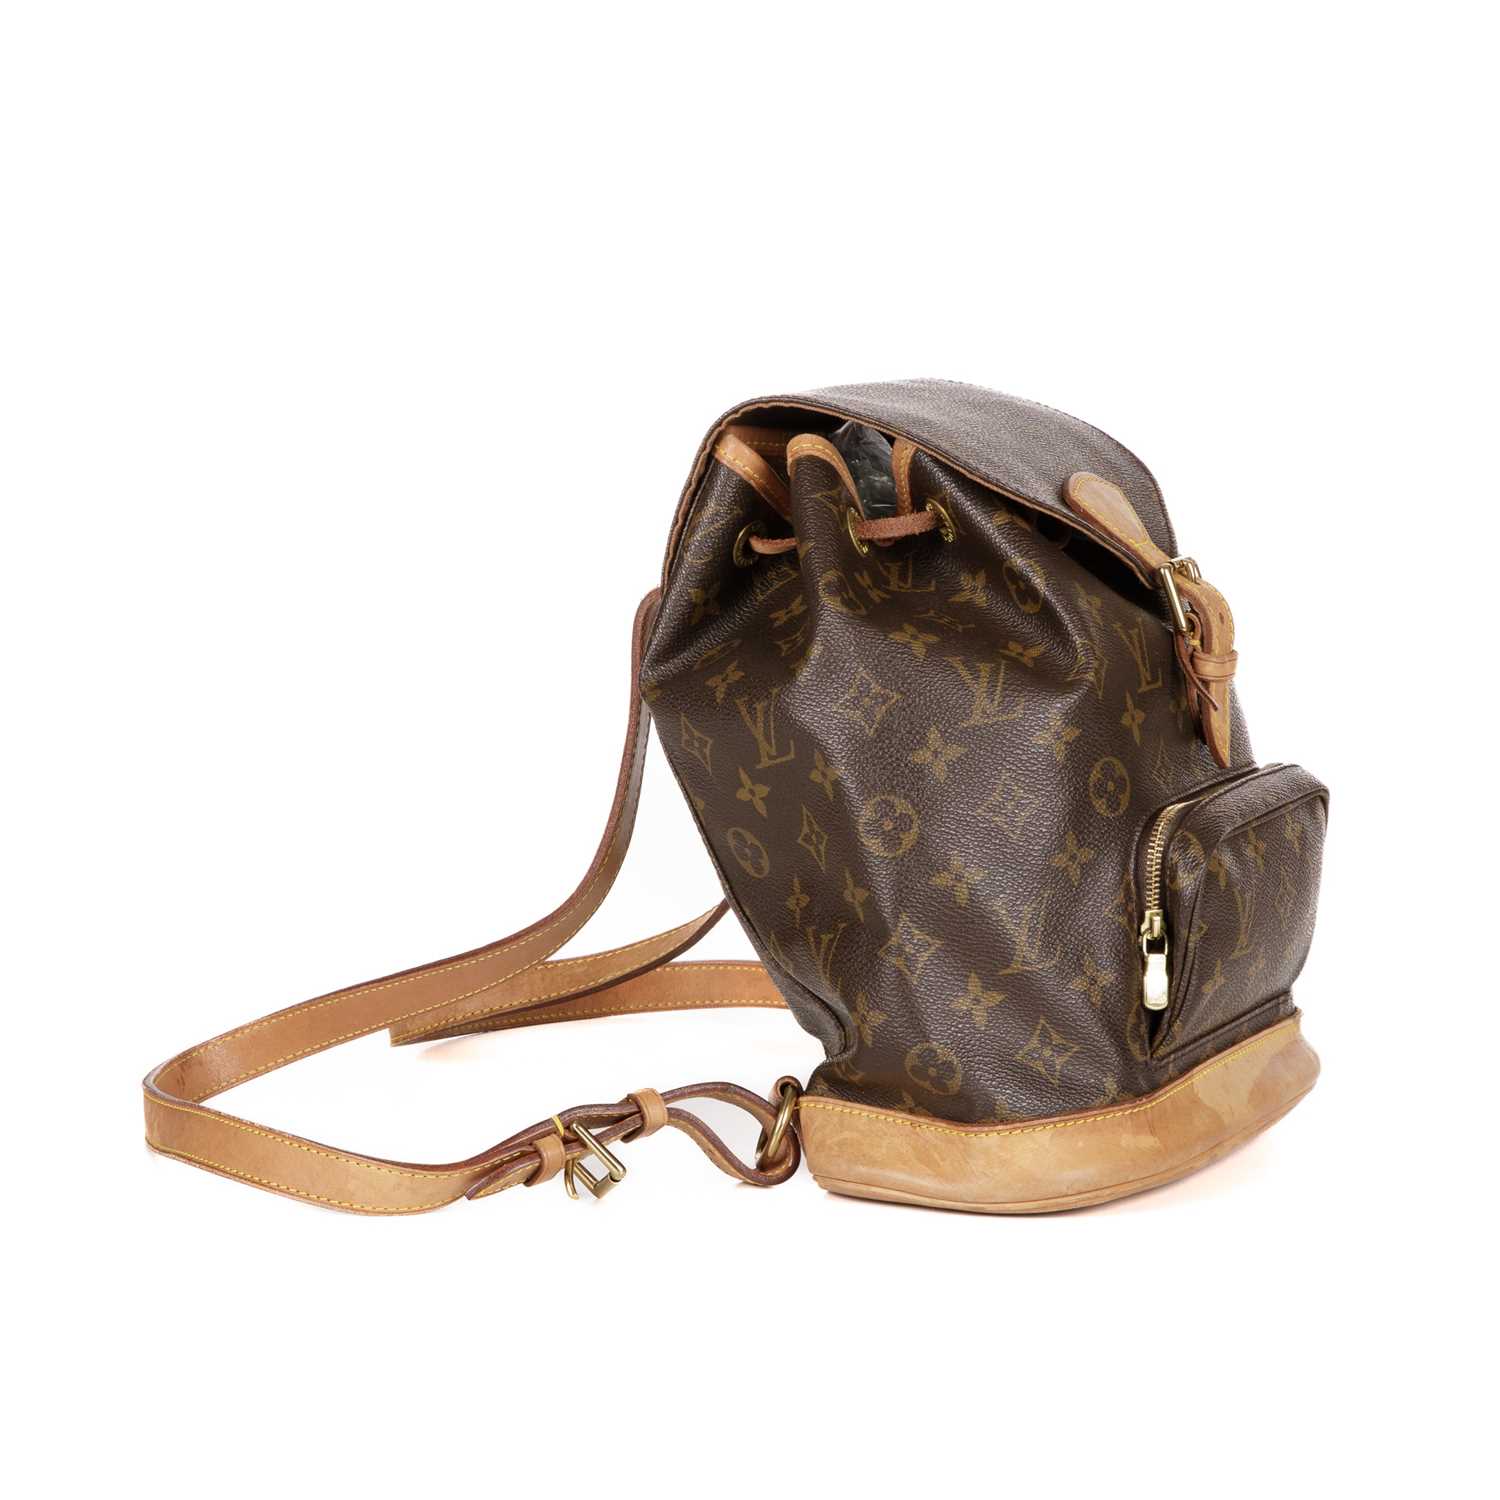 Louis Vuitton, a monogram Montsouris MM handbag, designed with the maker's signature monogram coated - Image 3 of 4